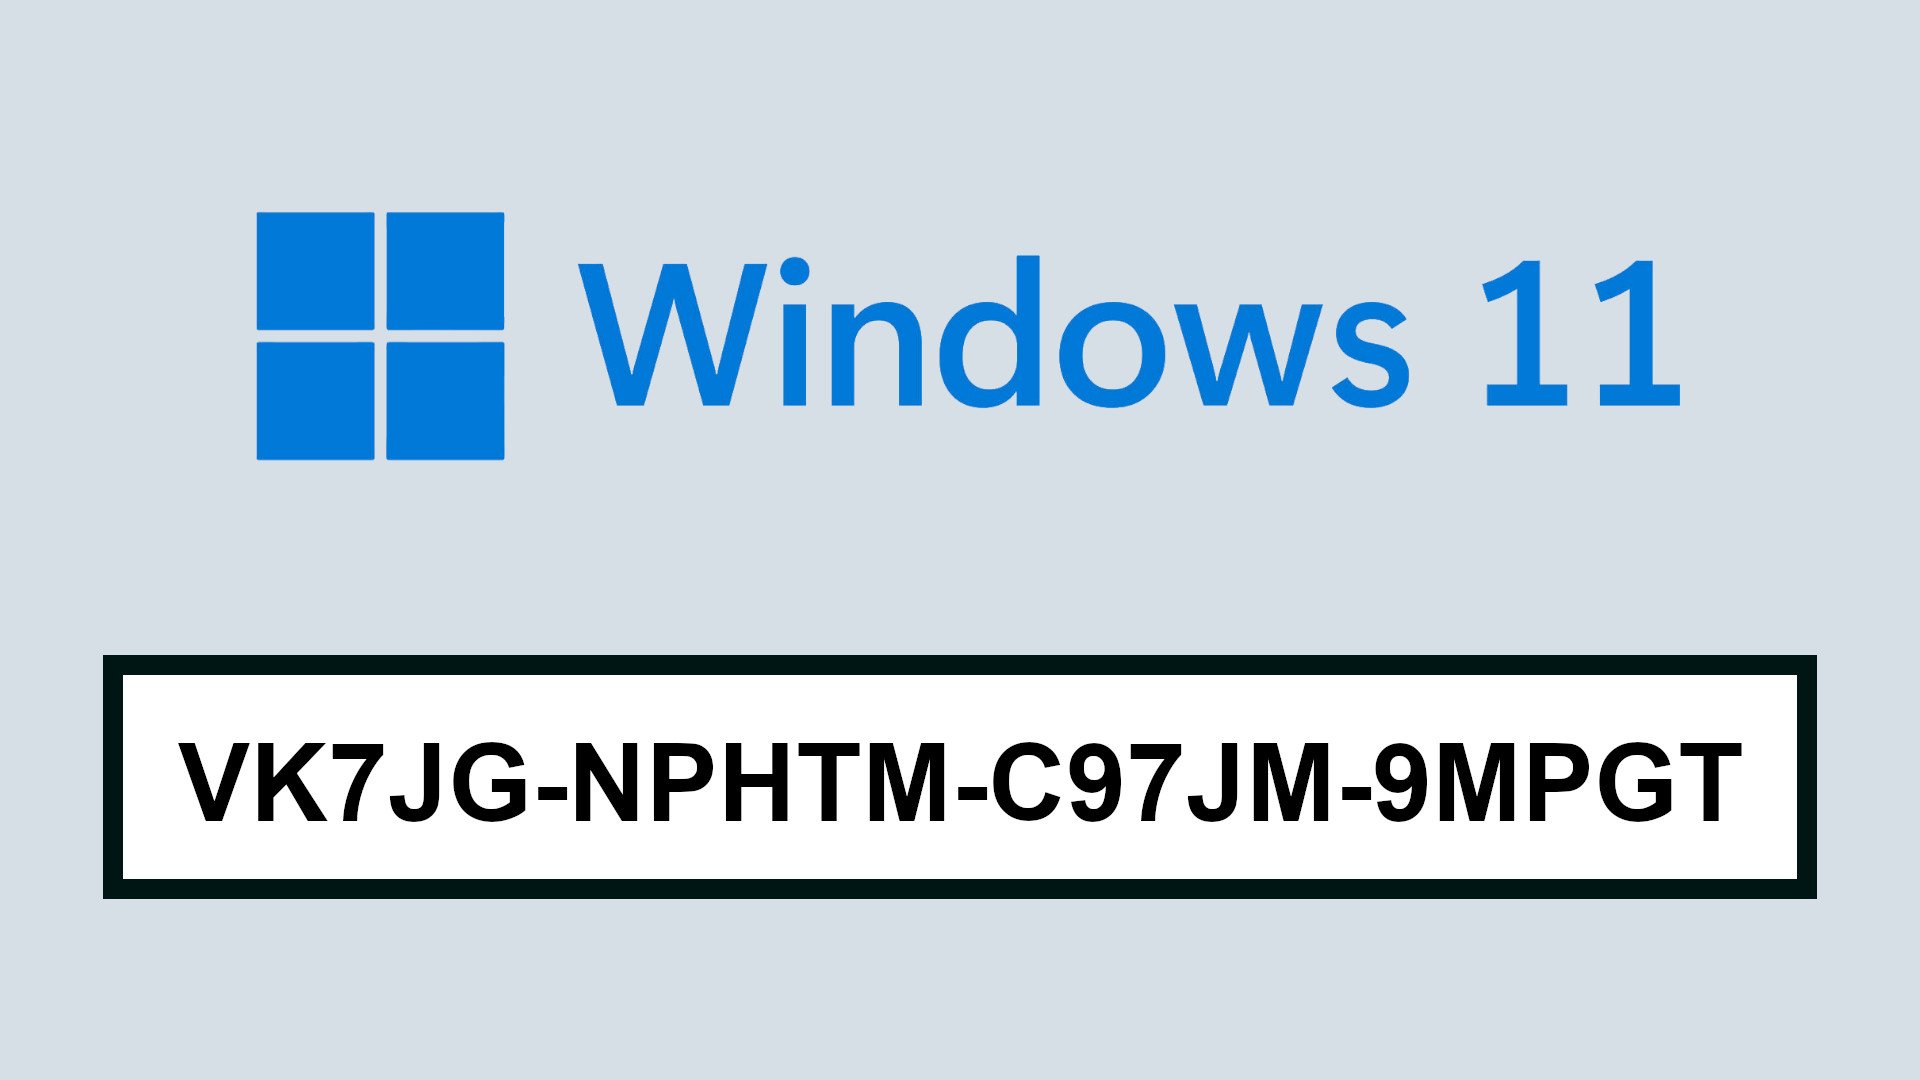 Windows 11 Professional Digital License Key Online, 56% OFF